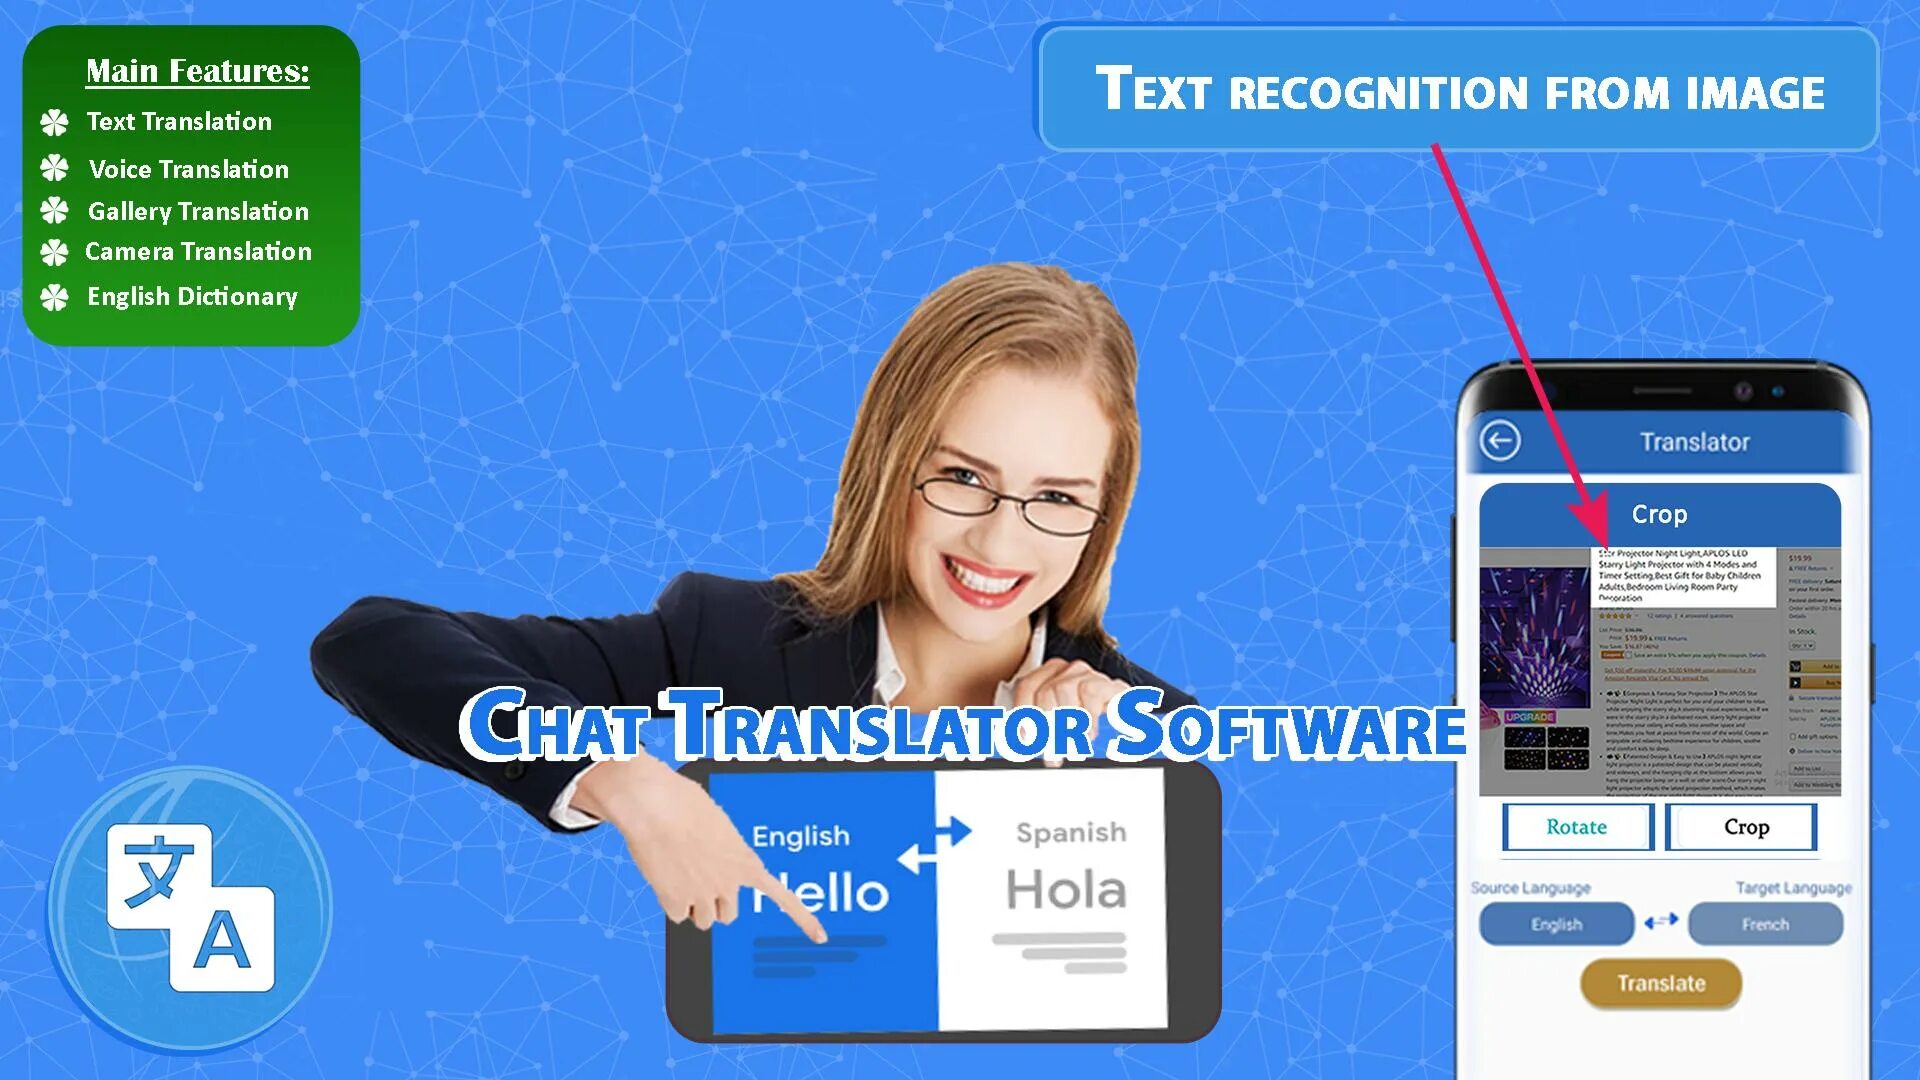 Переводчик first. Фото переводчик. Chat Translator. Translator Android. Фотопереводчик.